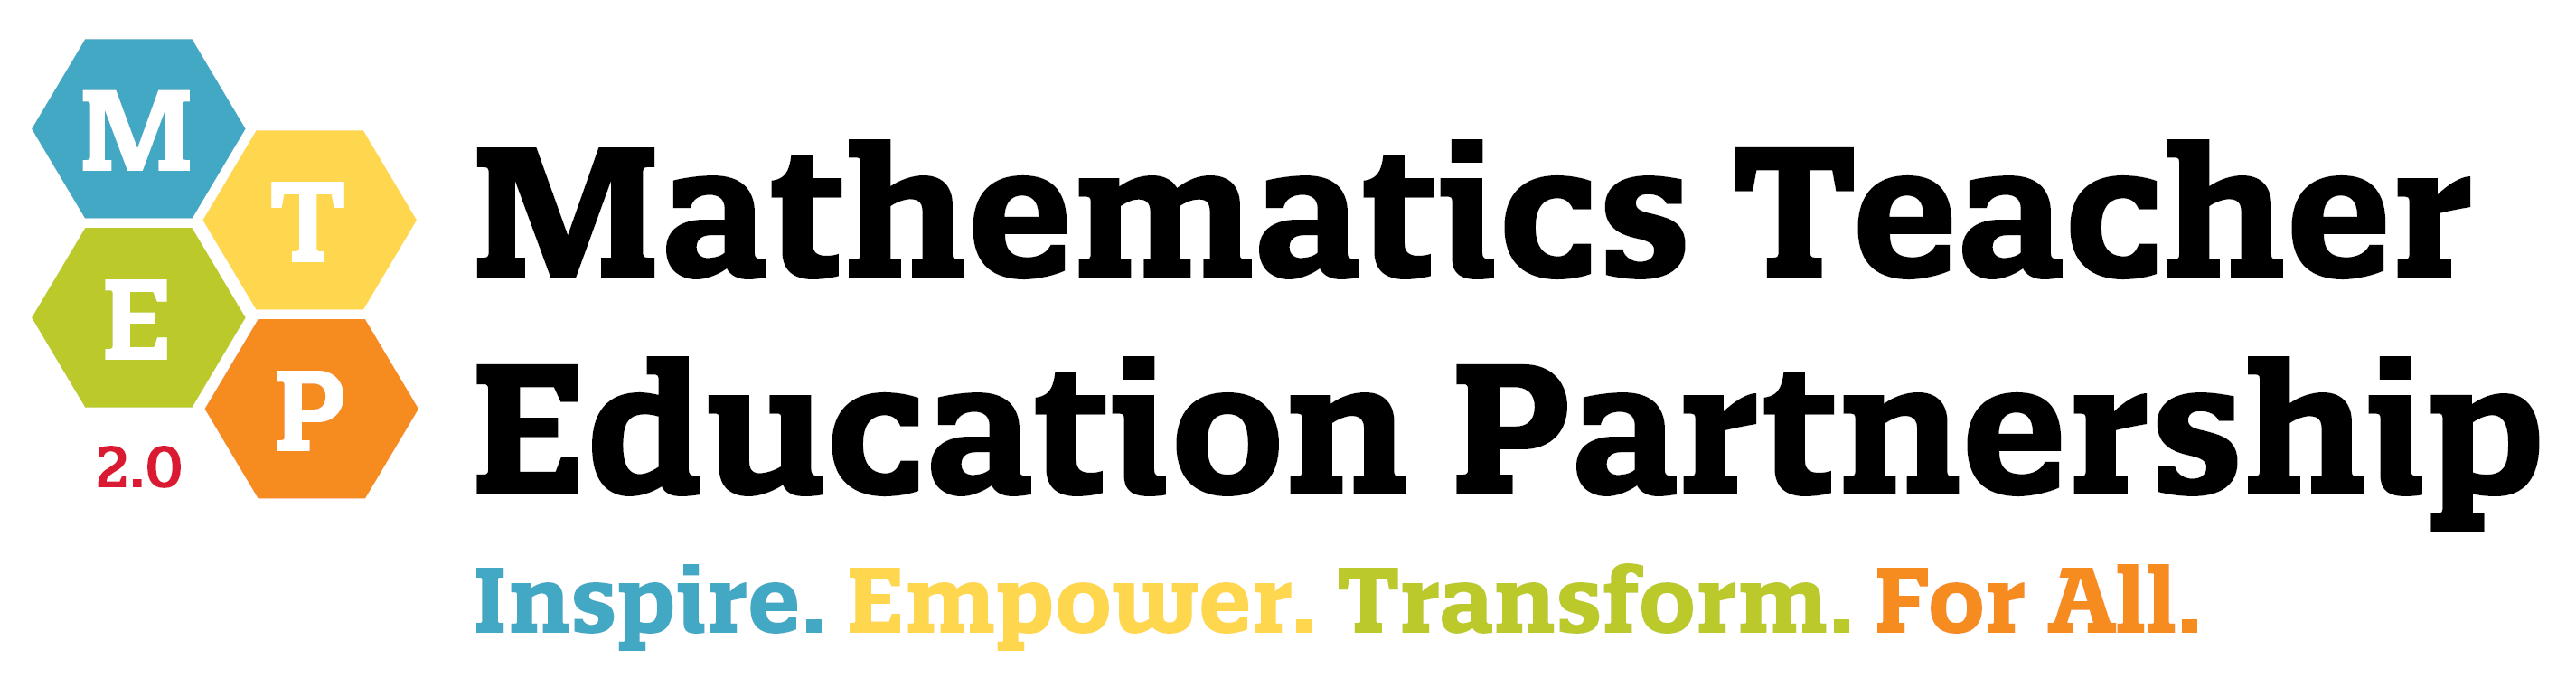 Mathematics Teacher Education Partnership: Inspire. Empower. Transform. For All.